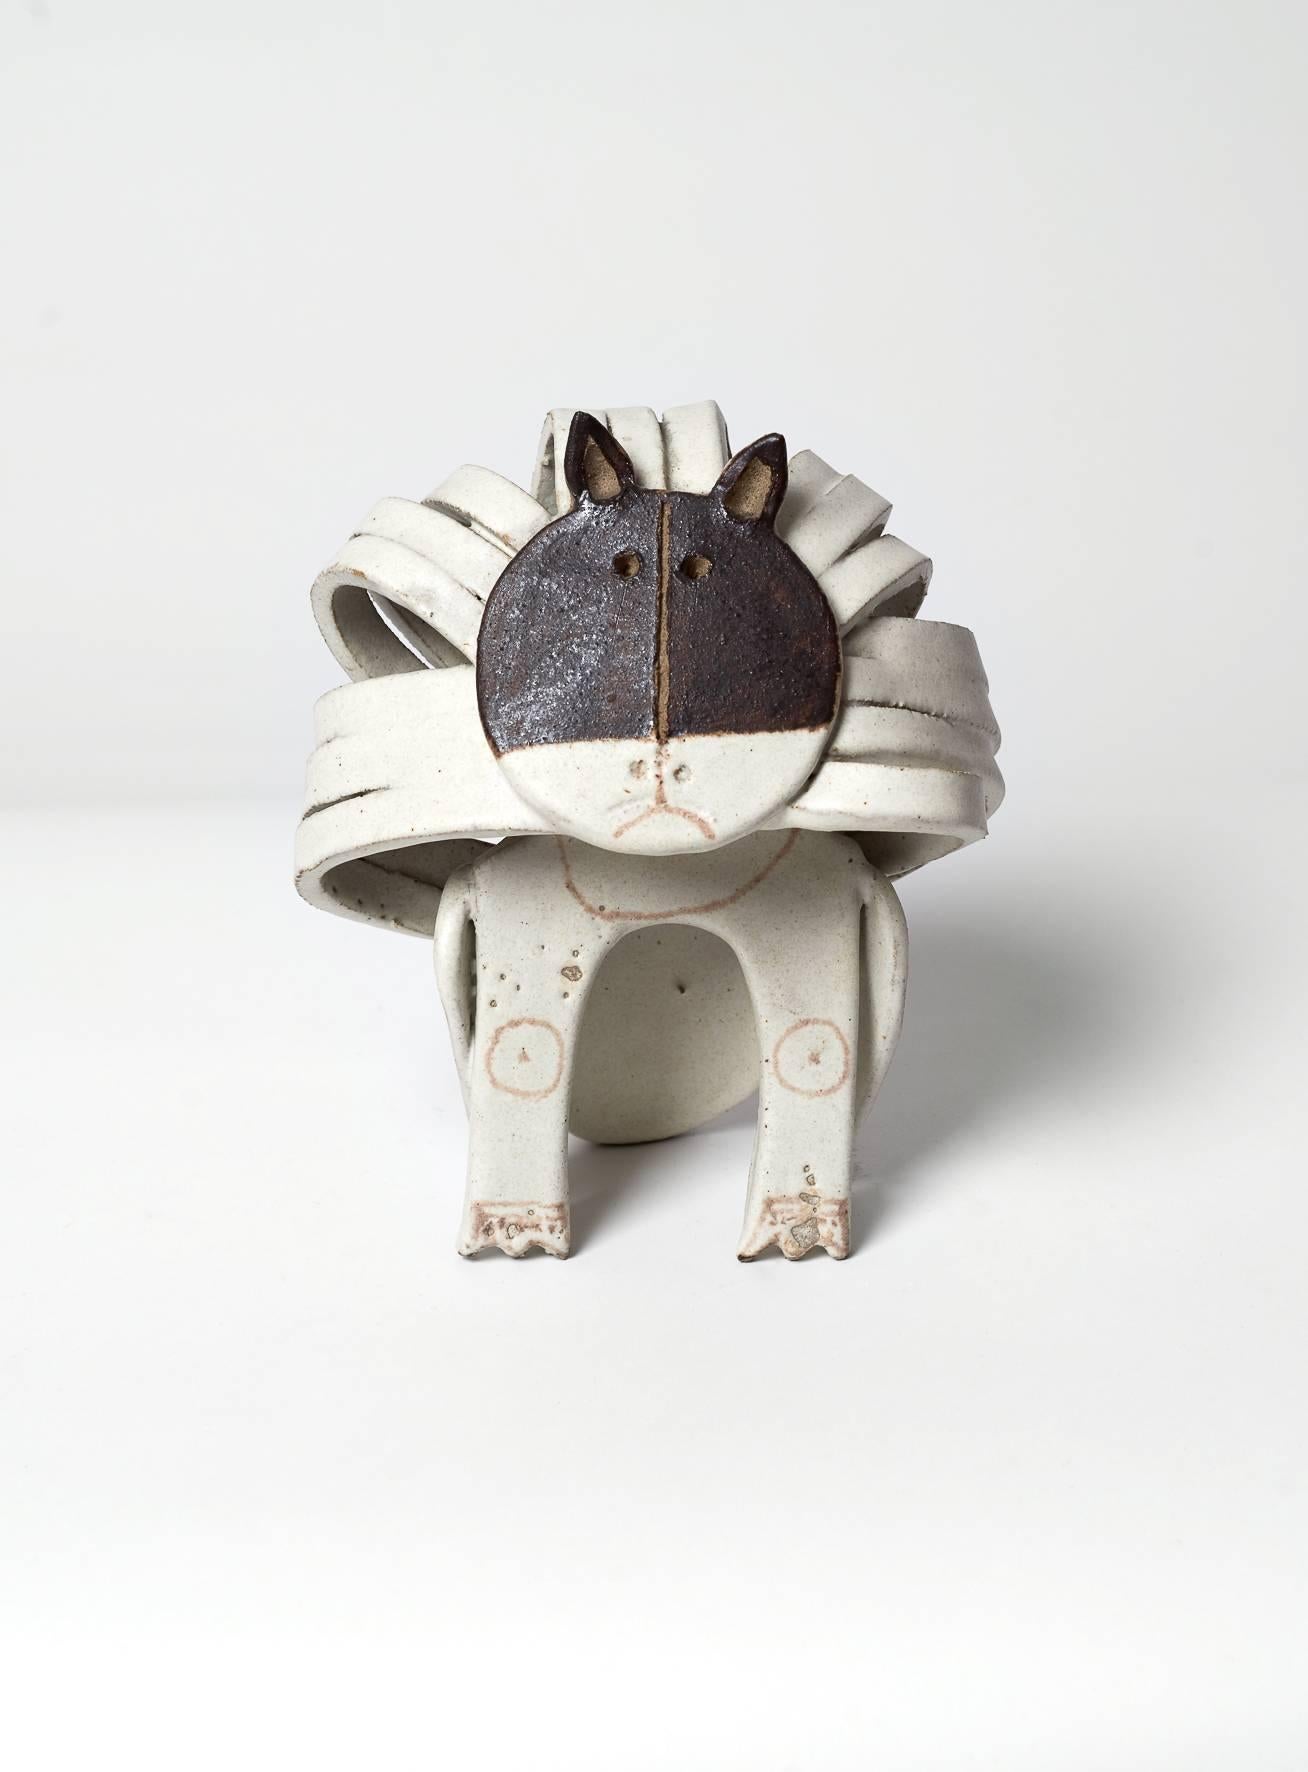 Ceramic stylised cat signed Gambone, Italy, 1970s.